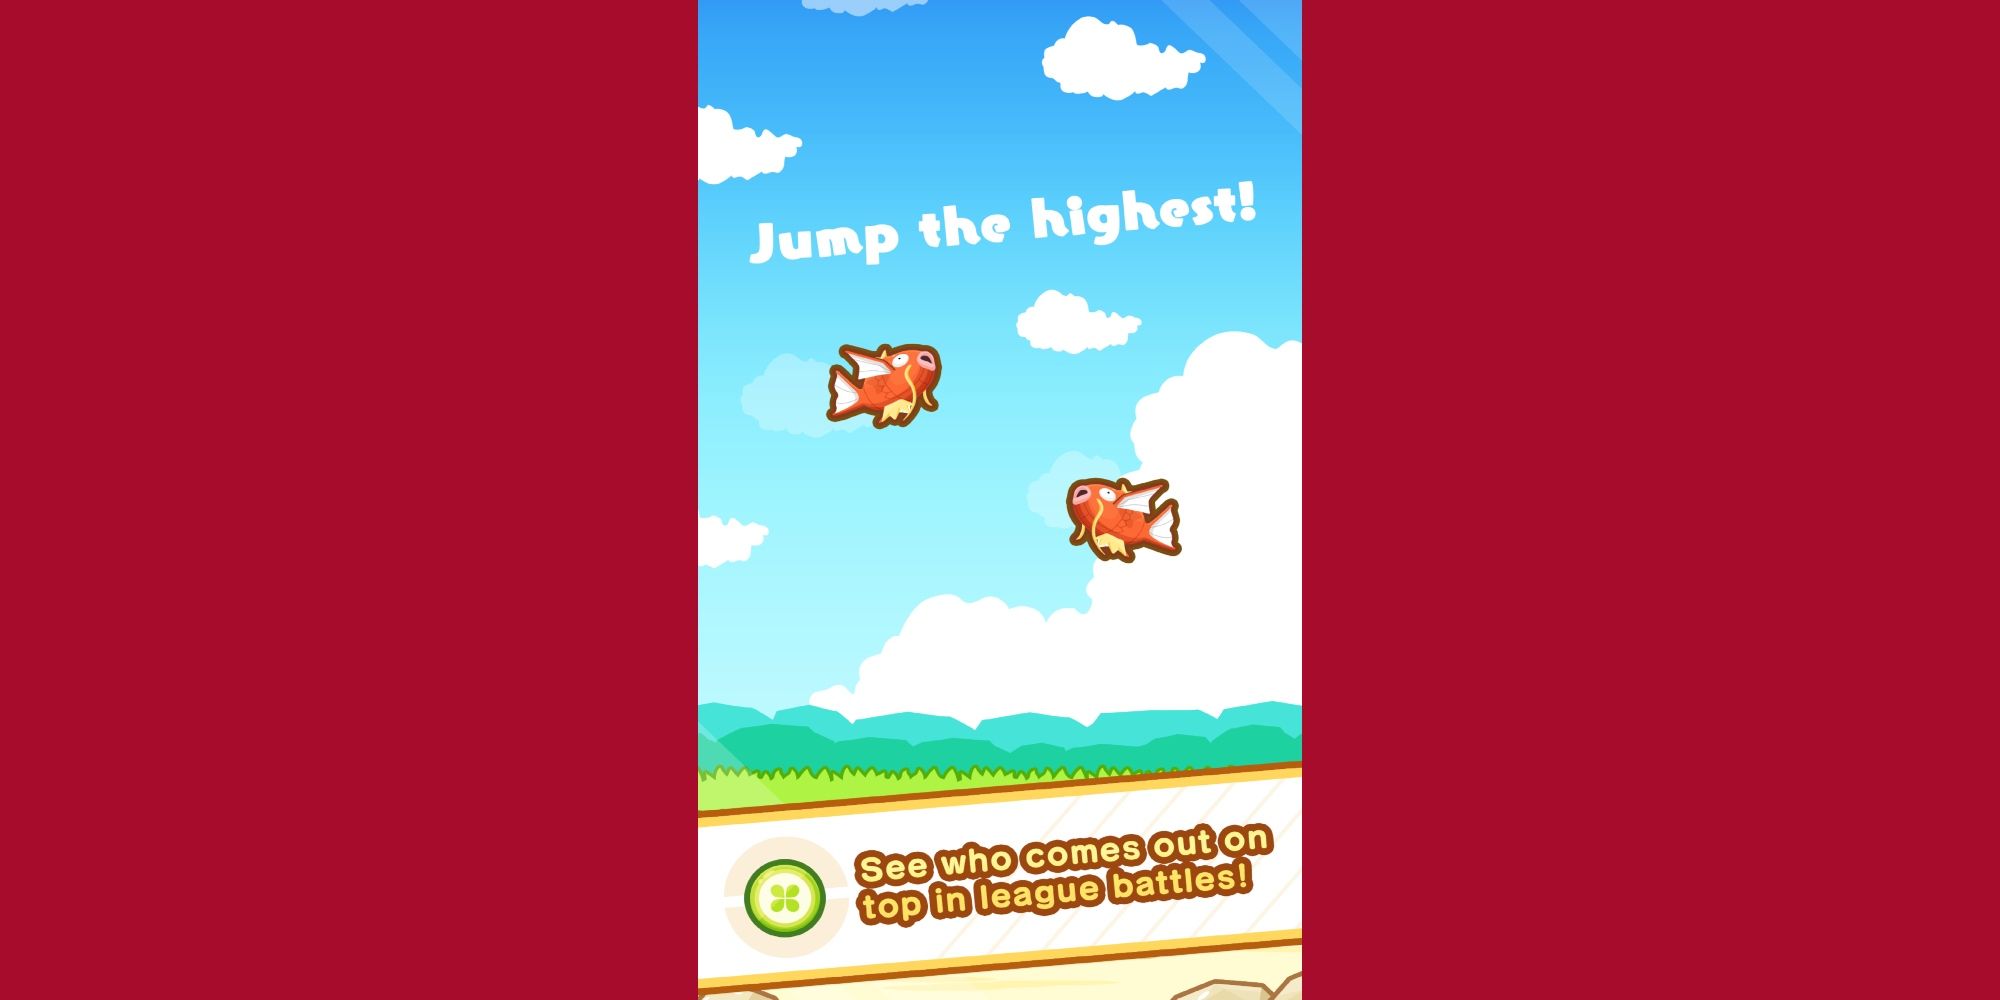 Player trains a Magikarp to jump higher